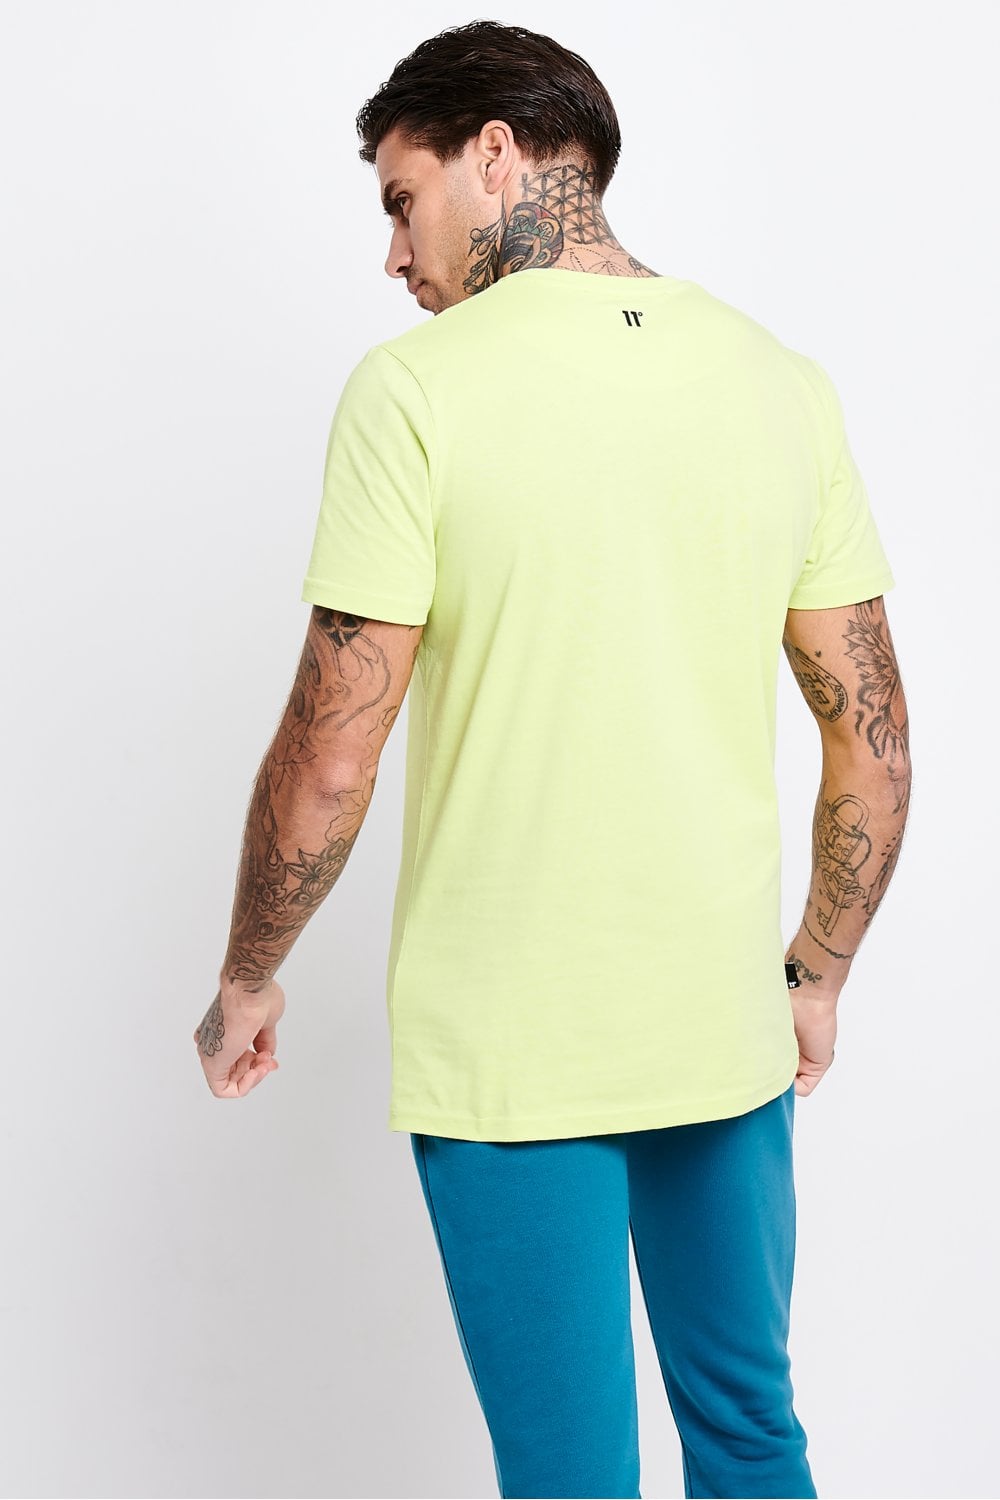 Camiseta 11º verde aguacate/azul - 11D636-228